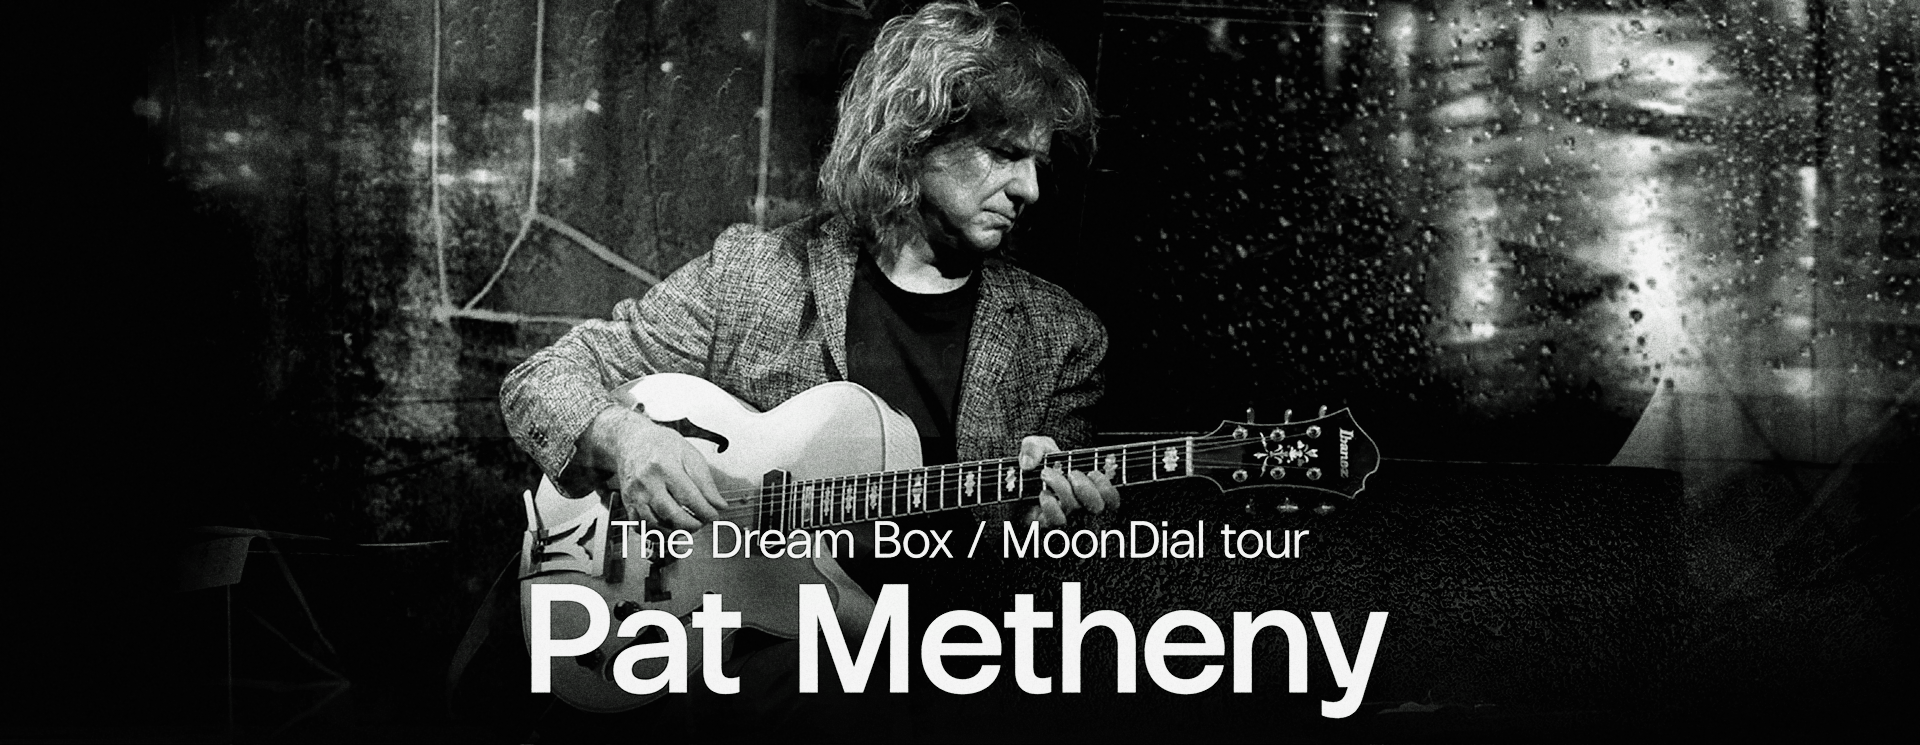 PAT METHENY DREAM BOX/MOON DIAL